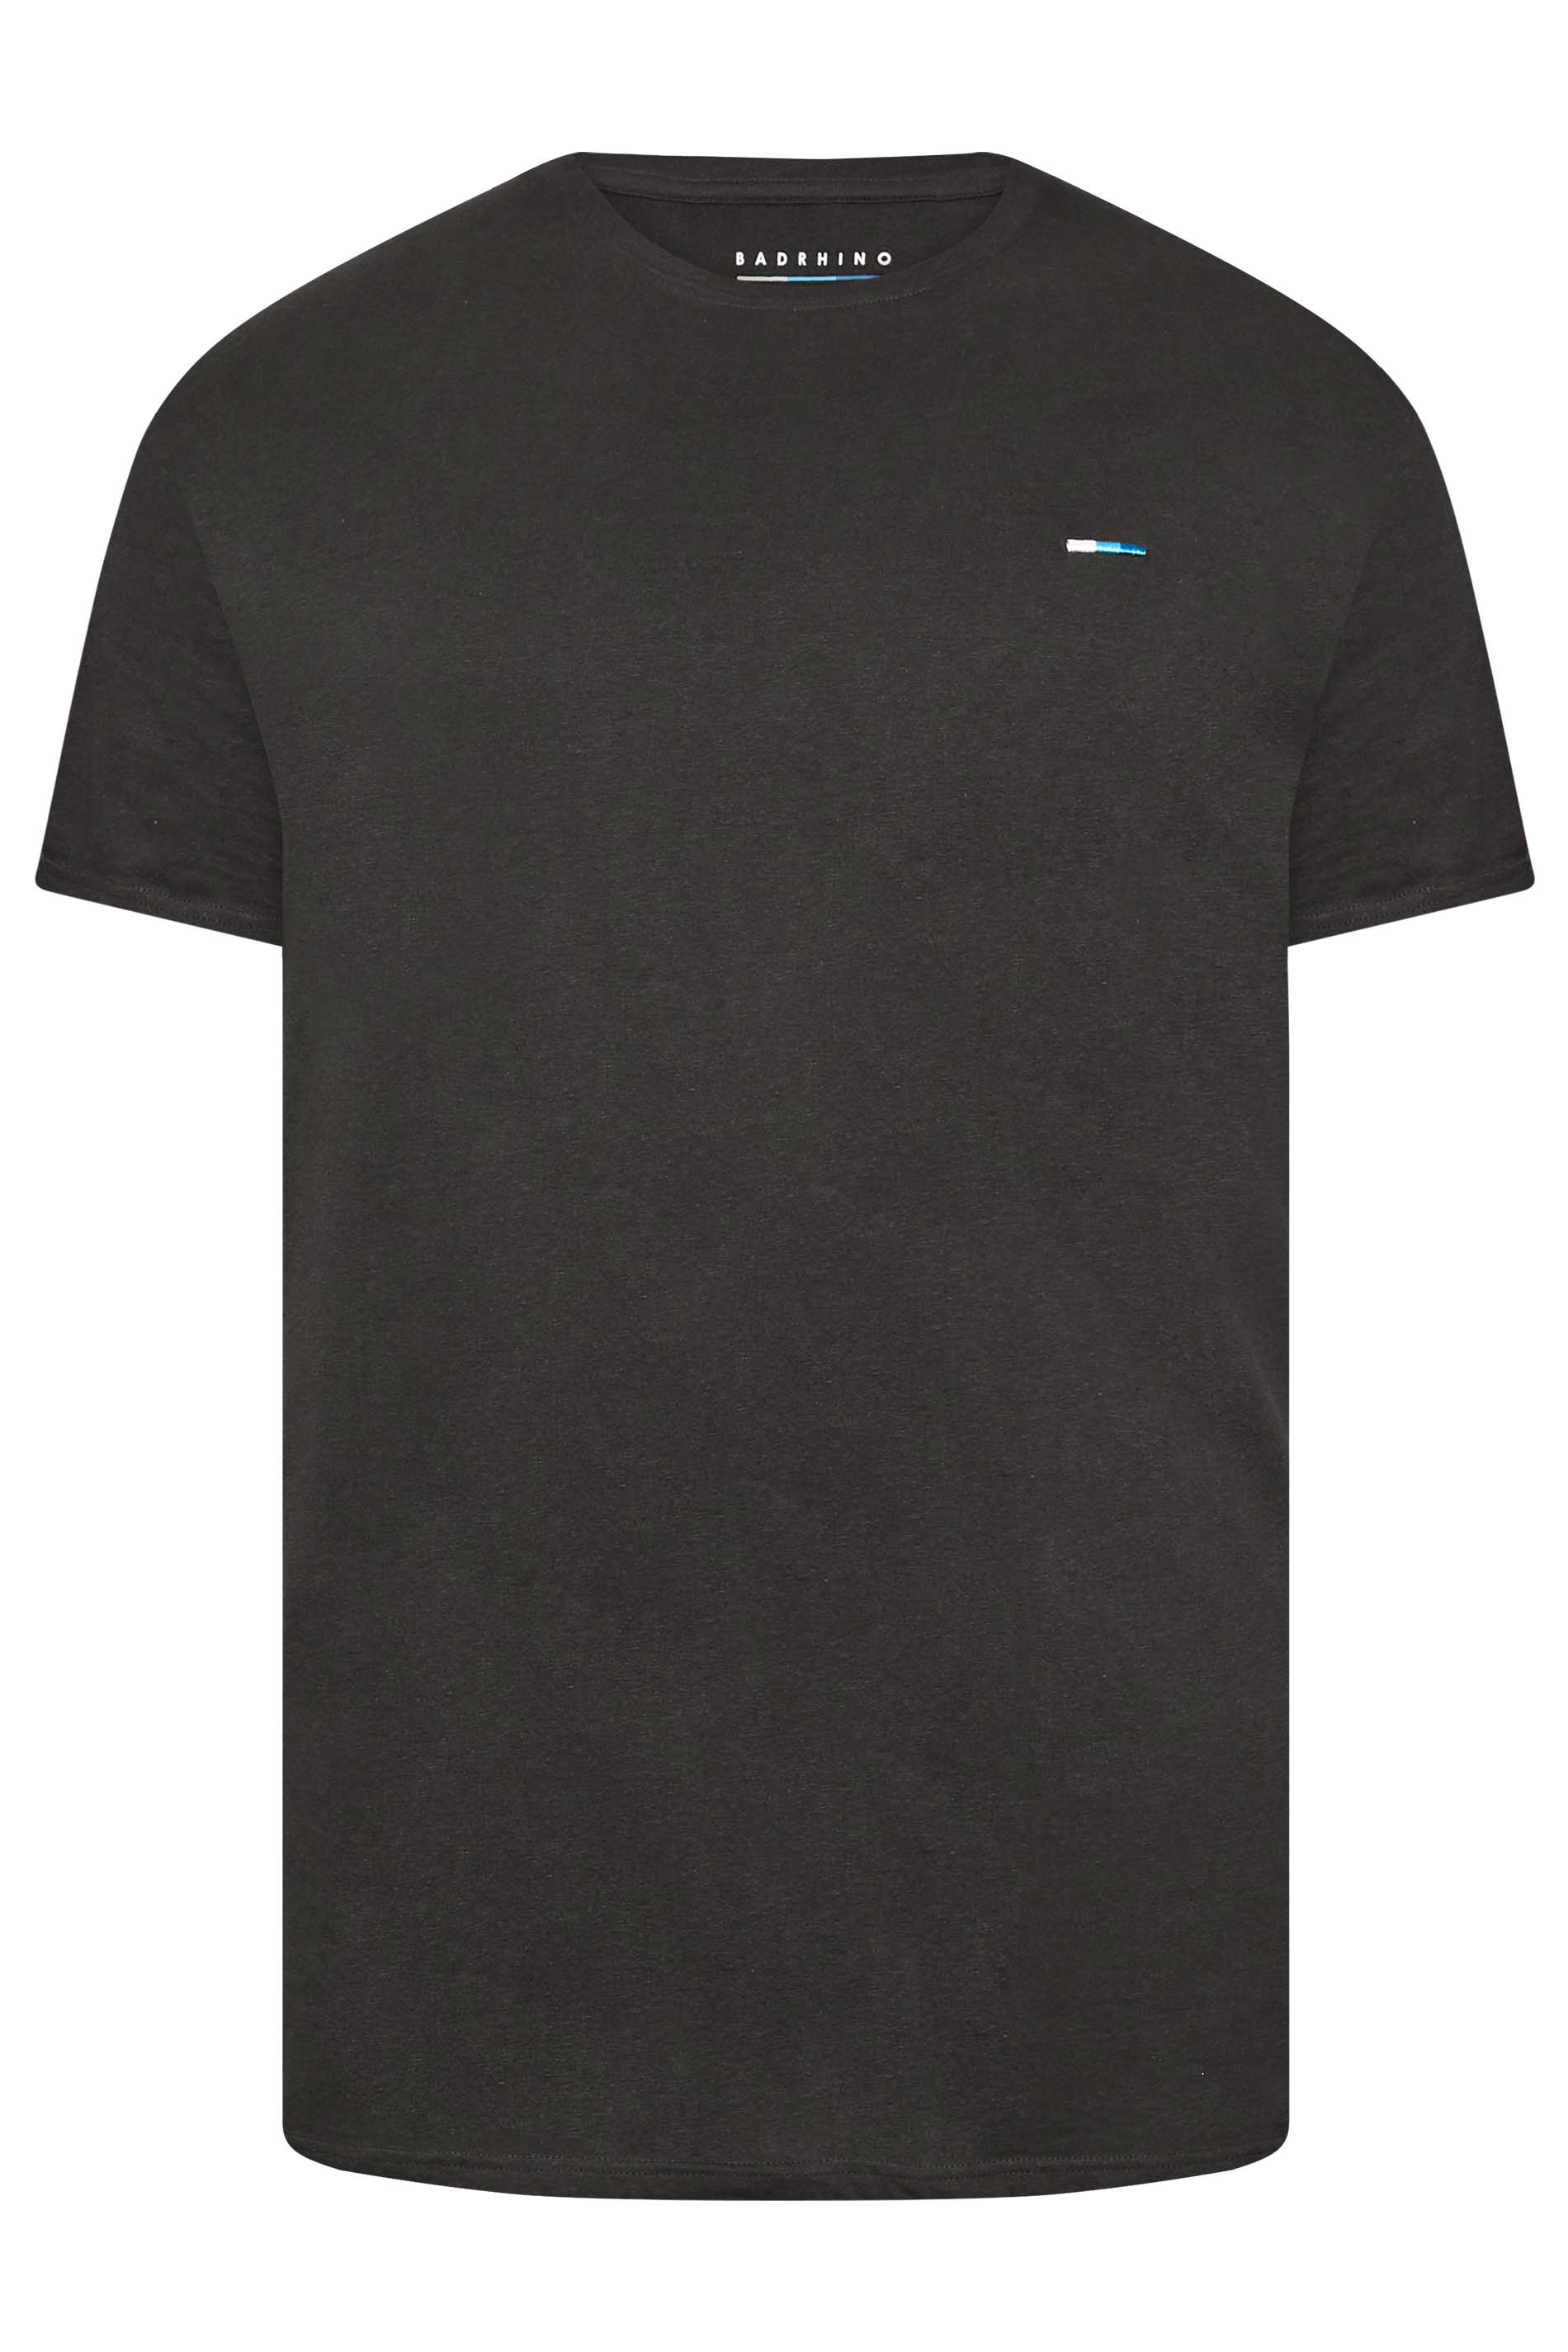 BadRhino For Less Grey Assorted Lightweight 5 Pack T-Shirts | BadRhino 3